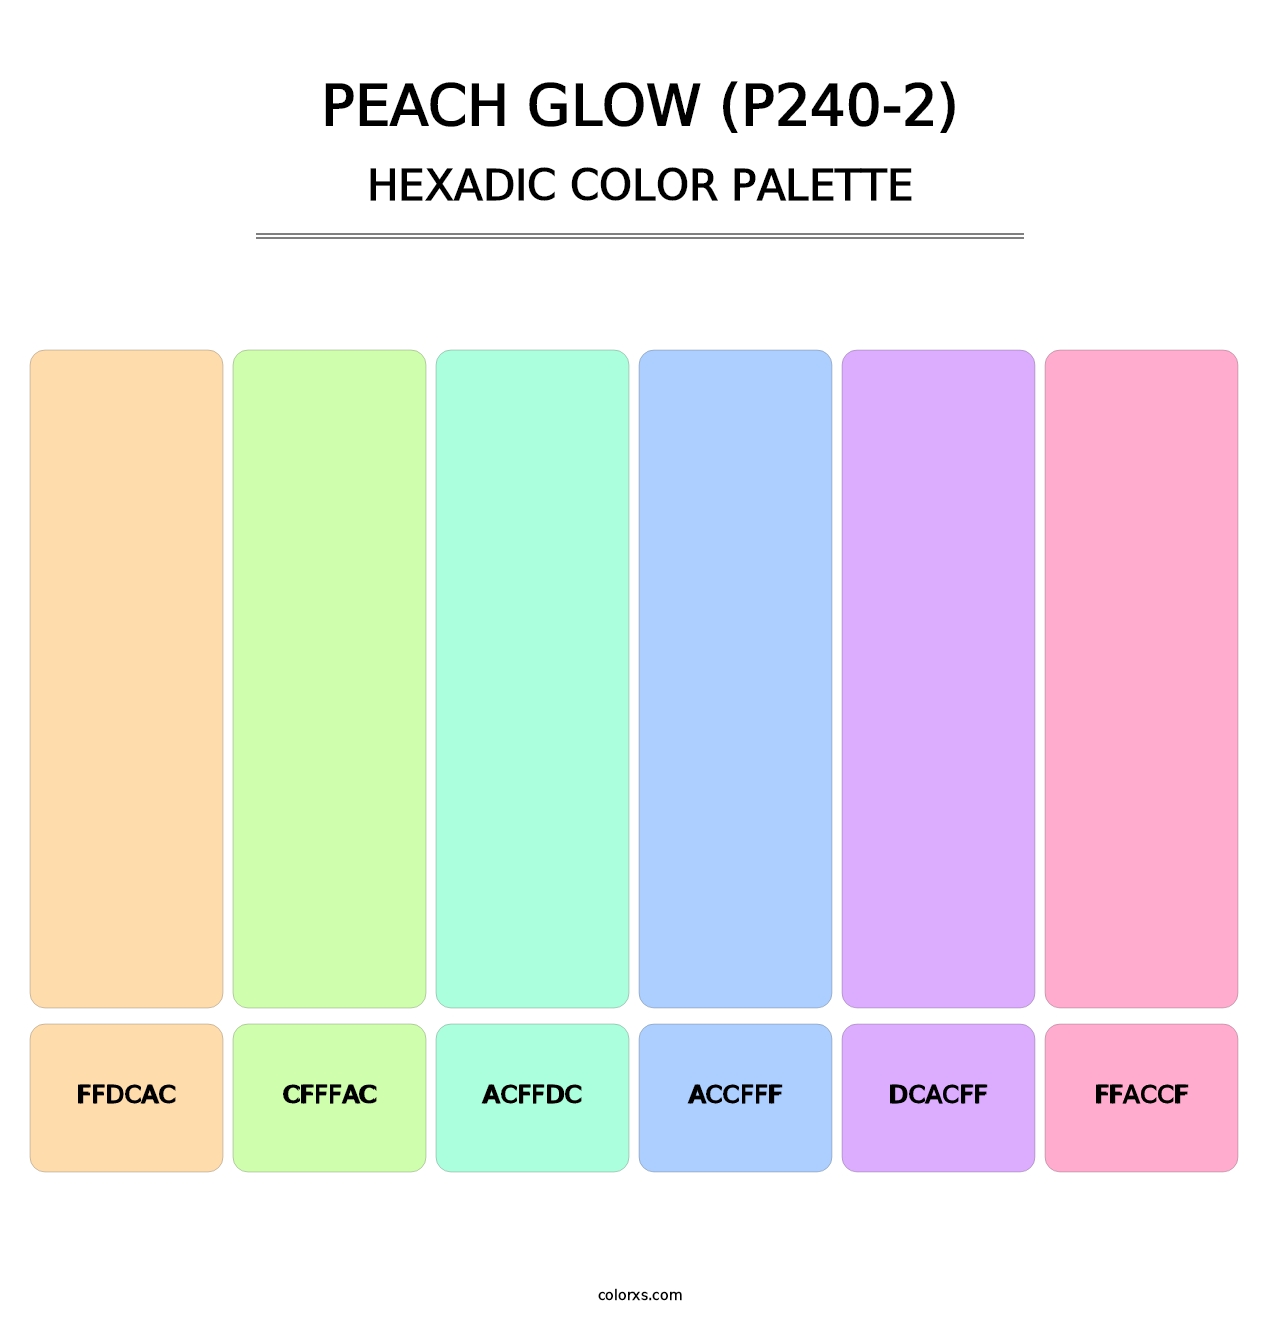 Peach Glow (P240-2) - Hexadic Color Palette